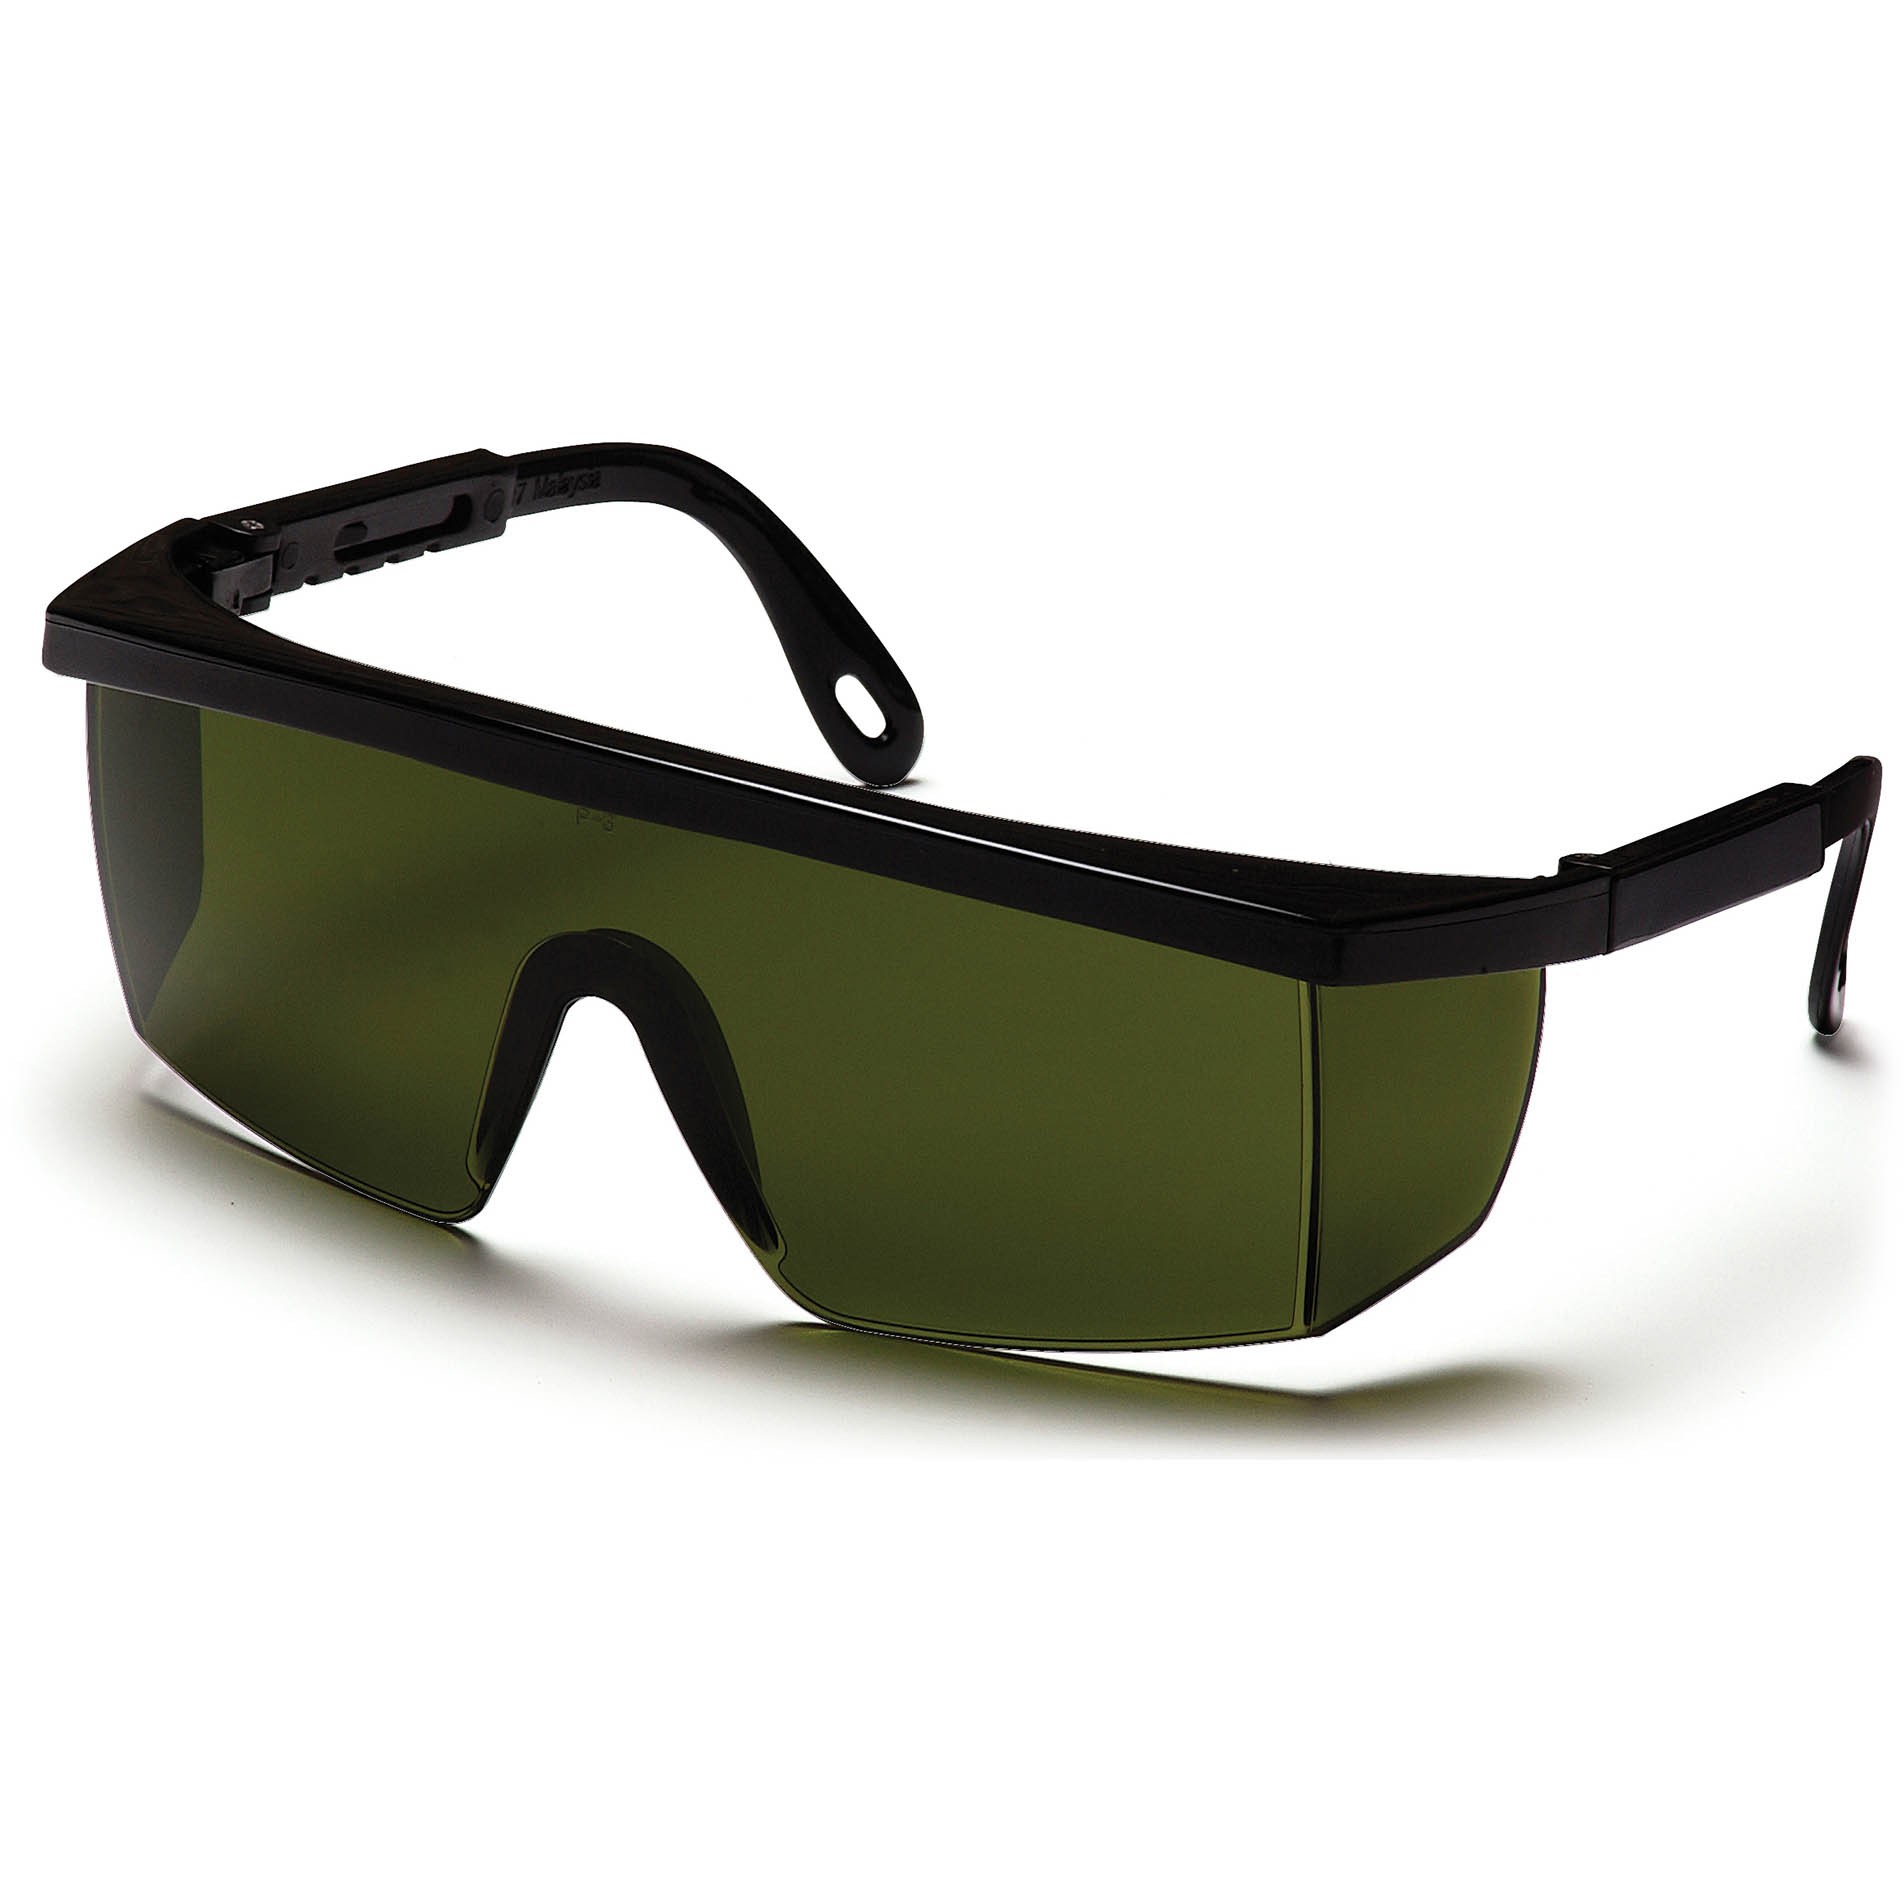 Pyramex Integra Safety Glasses Black Frame Green Shade 30 Lens 